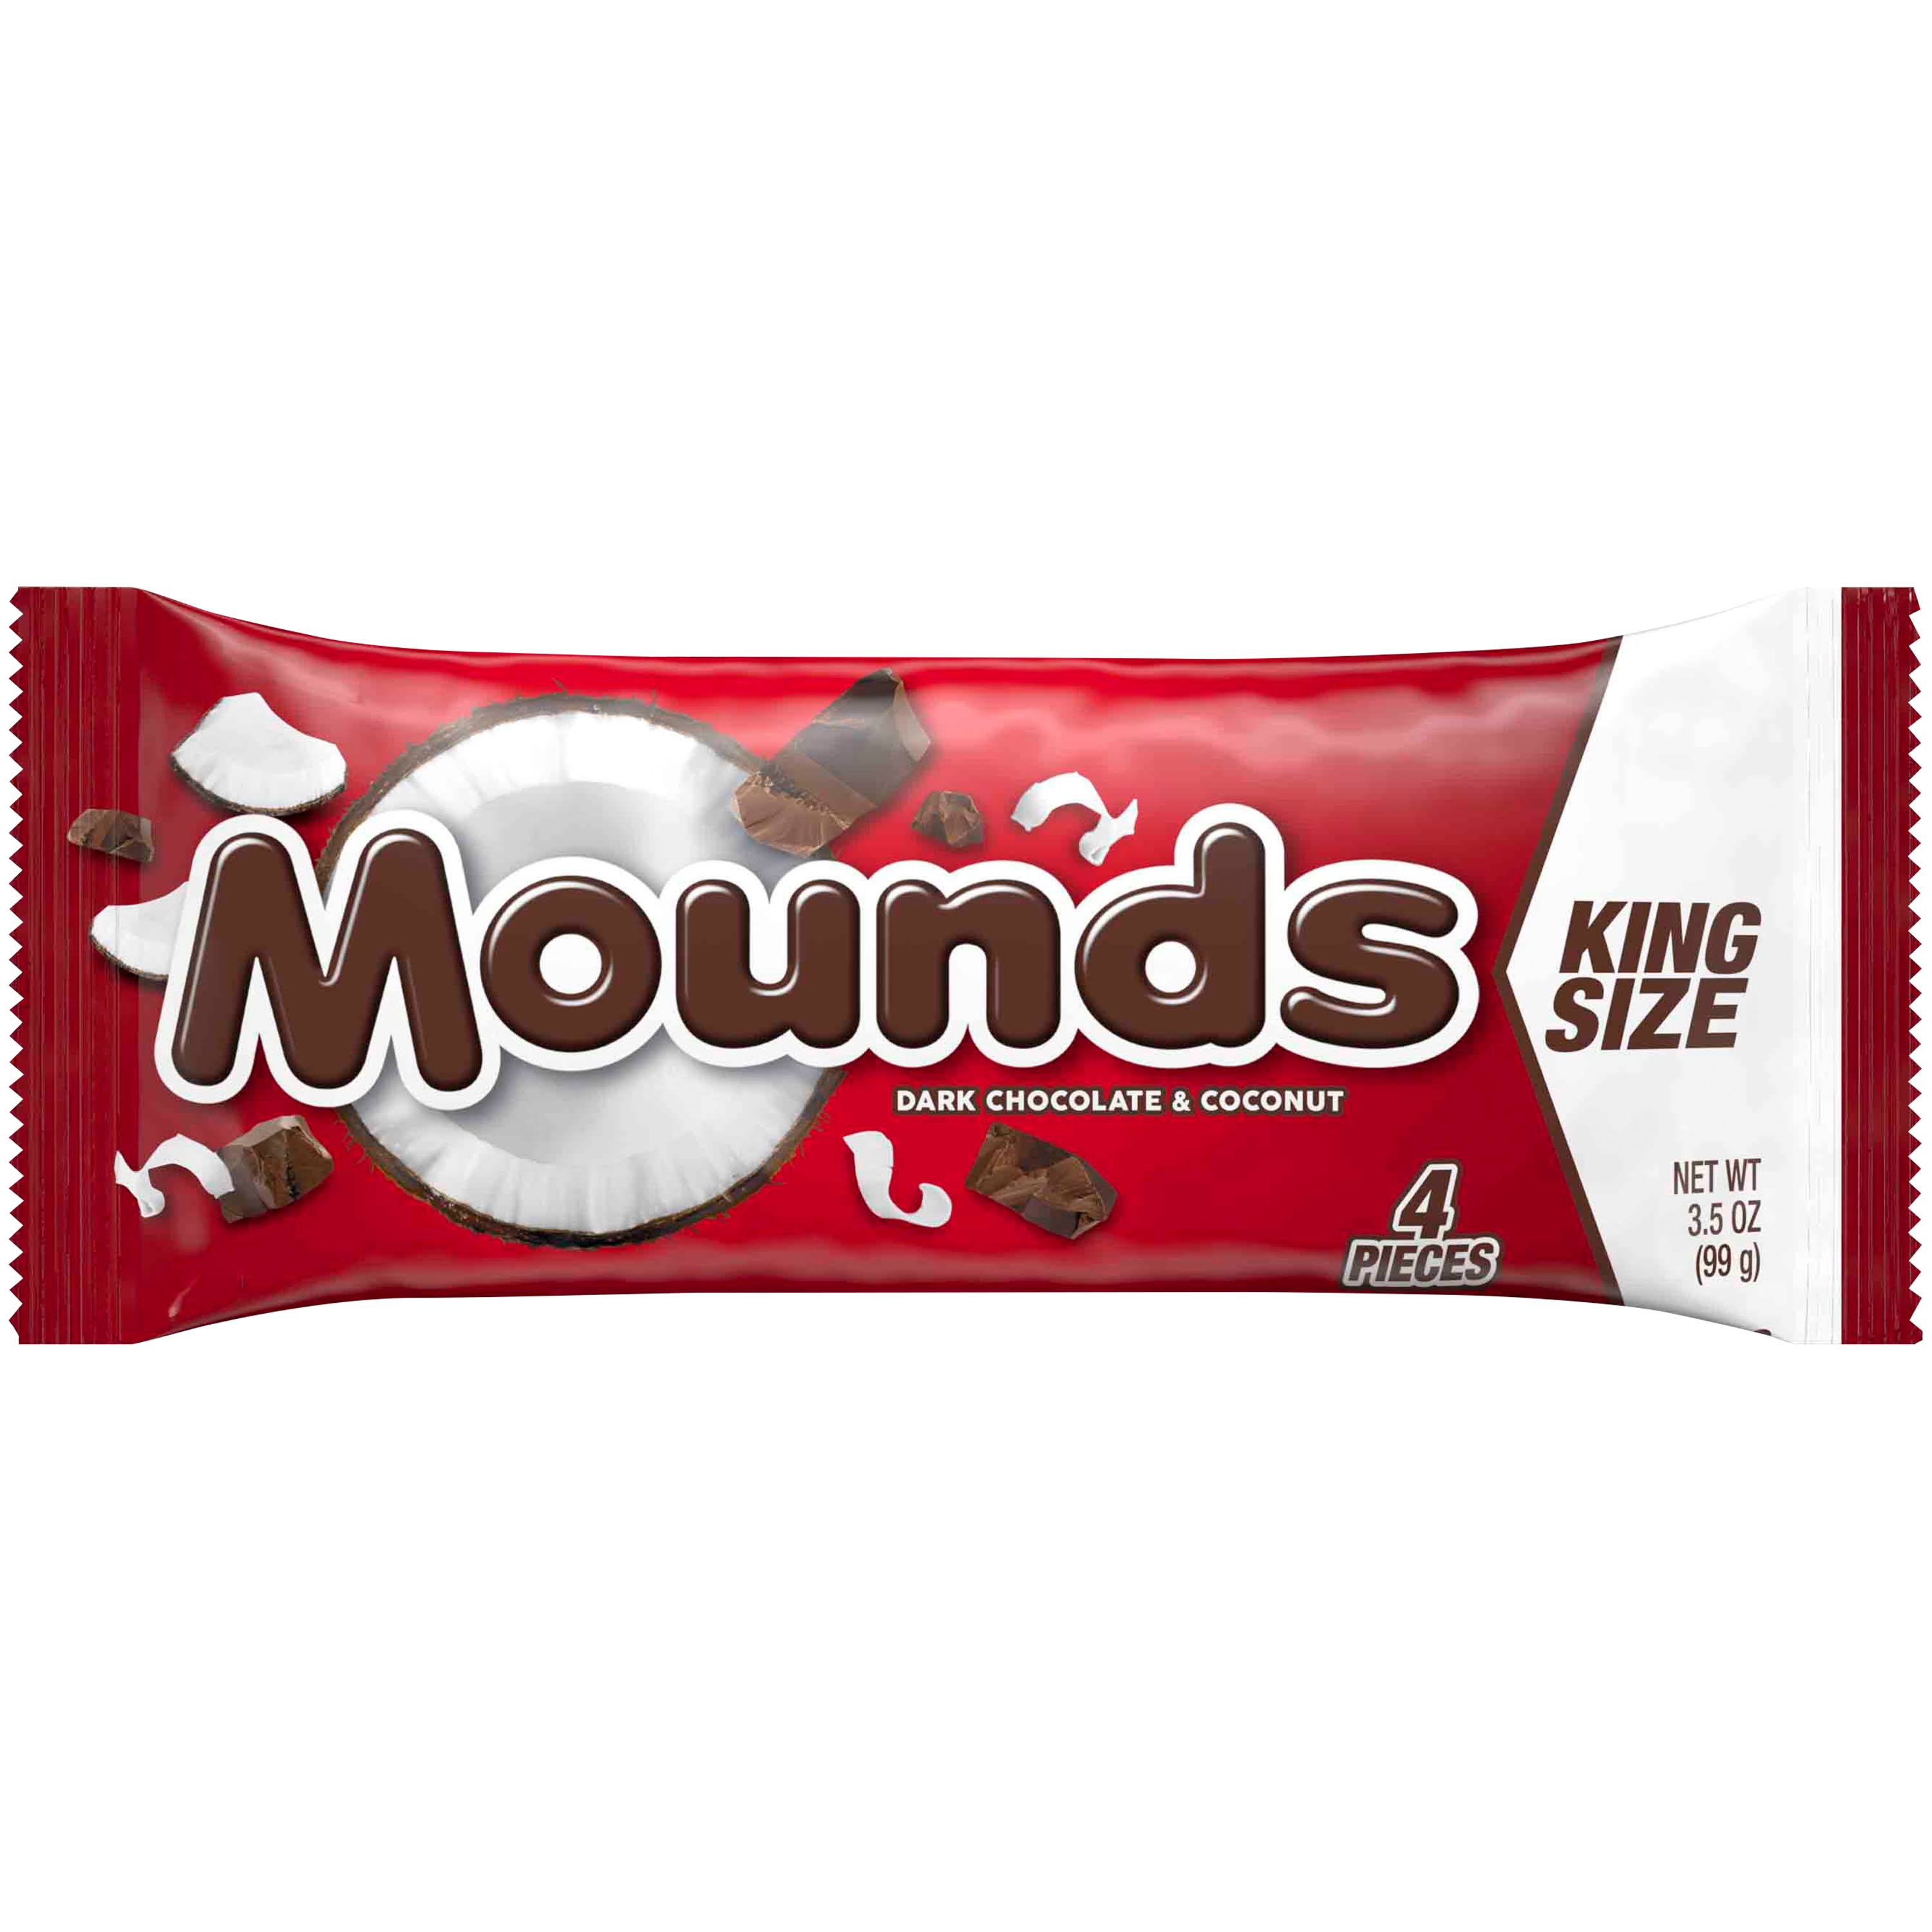 Mounds Dark Chocolate & Coconut, King Size - 4 pieces, 3.5 oz